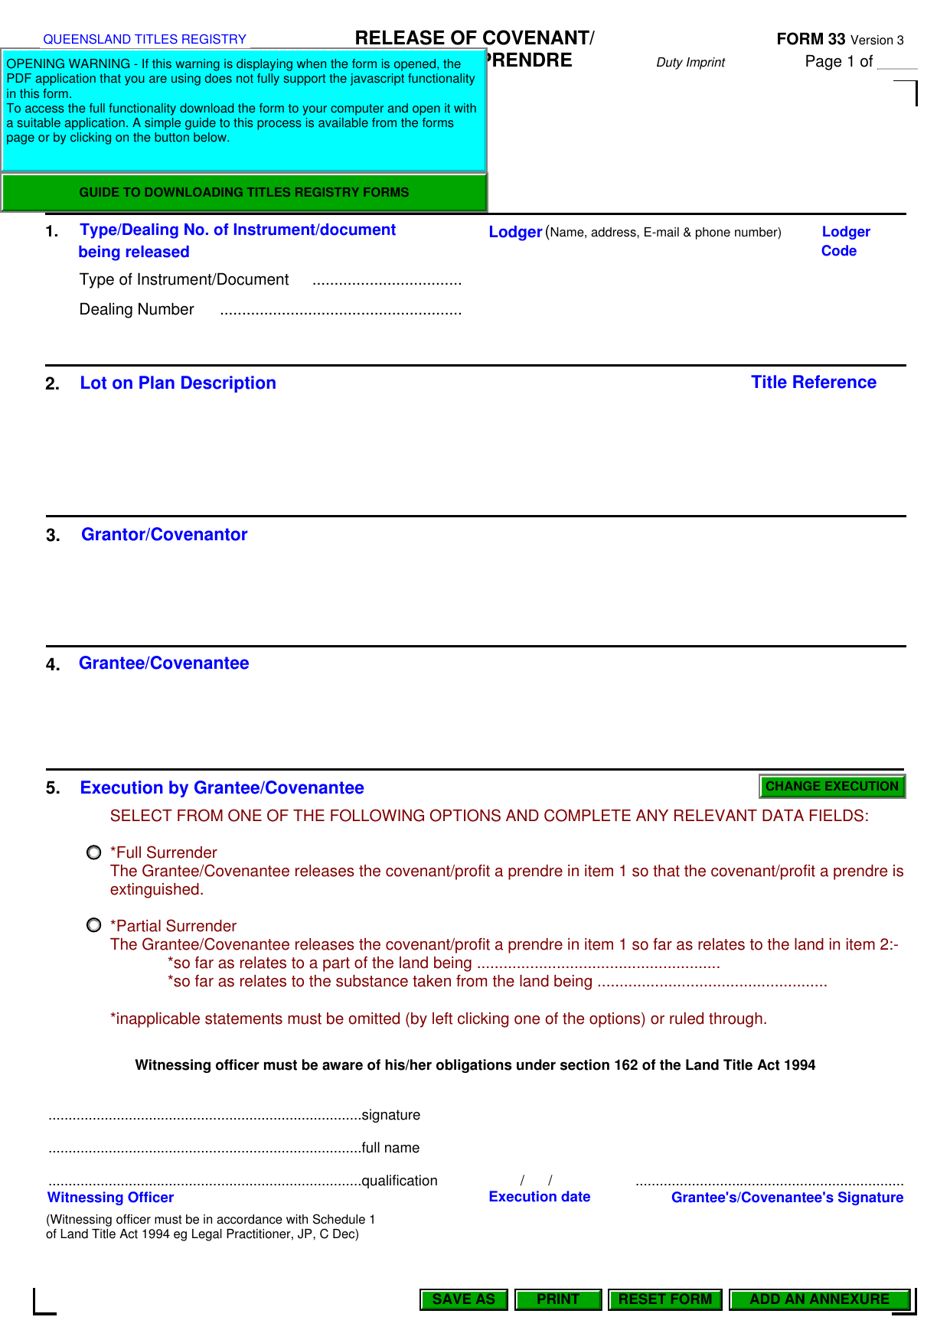 Form 33 Release of Covenant / Profit a Prendre - Queensland, Australia, Page 1